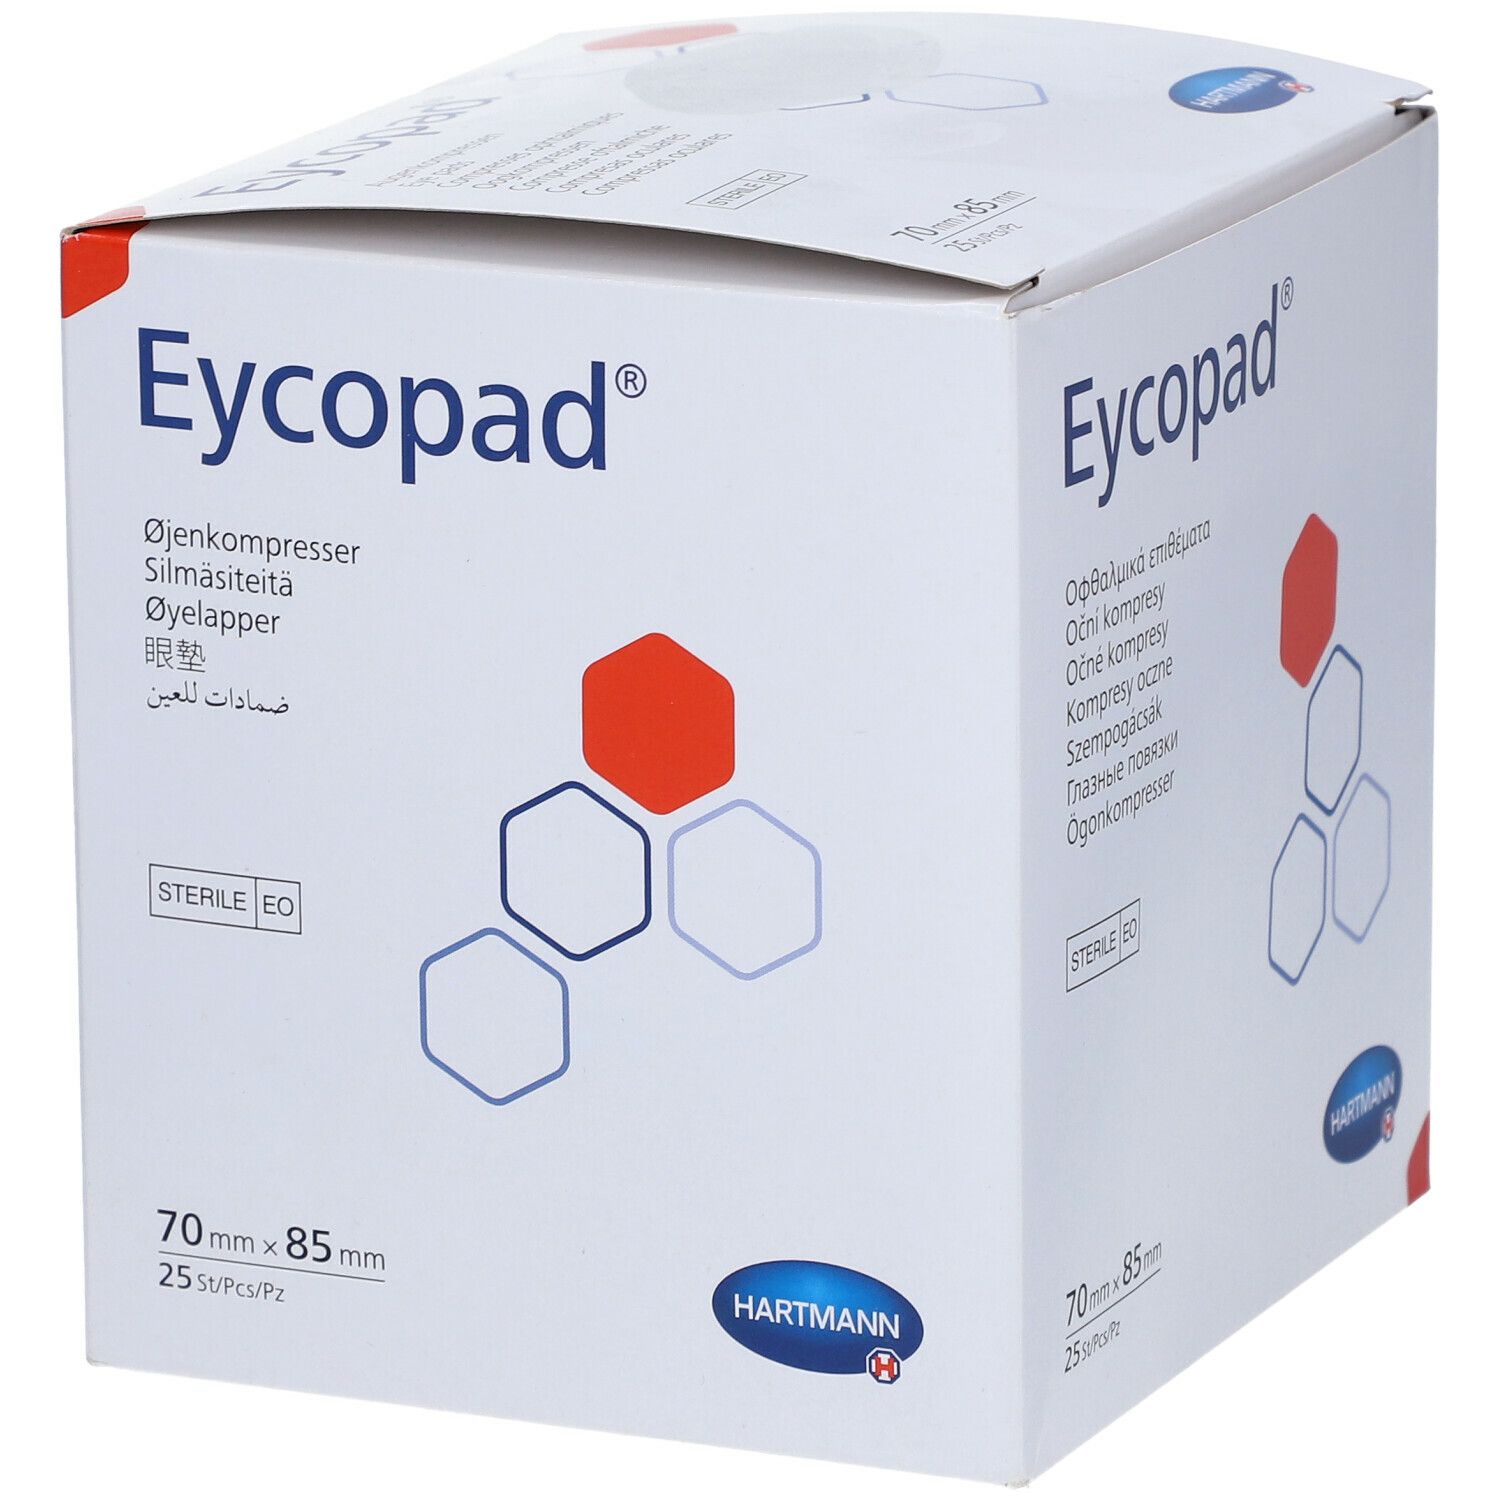 Eycopad® Augenkompresse steril 70 x 85mm